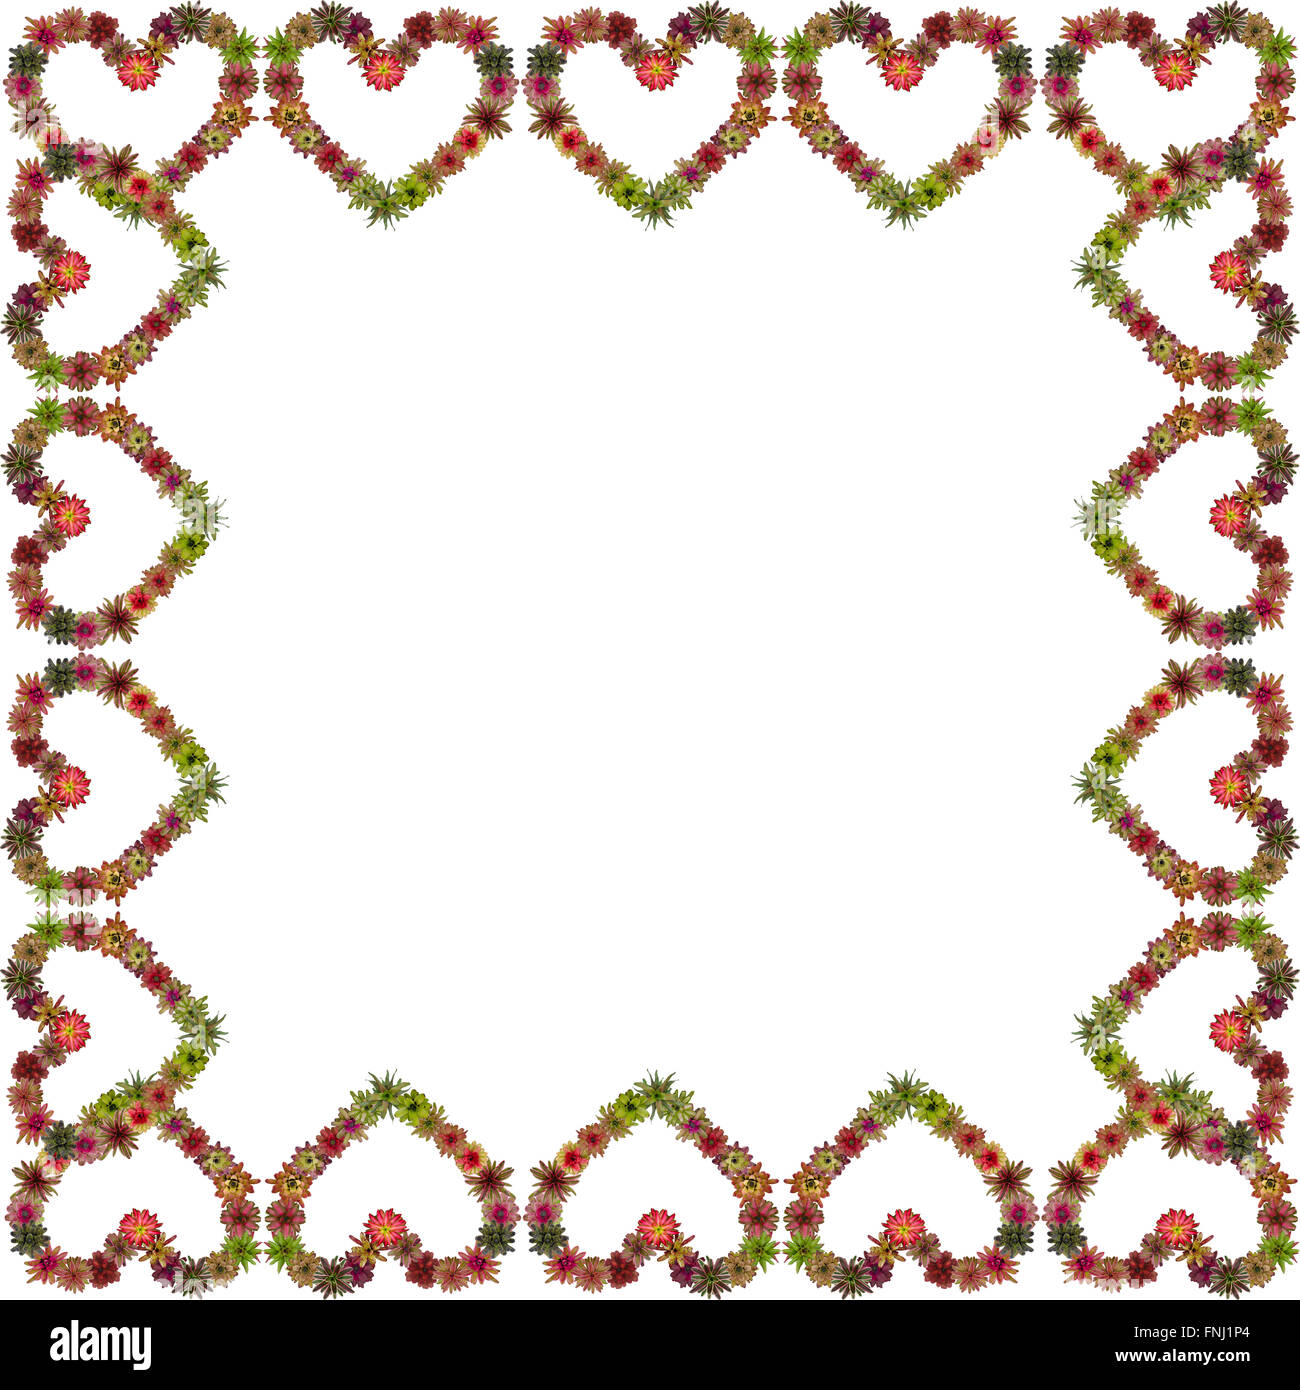 bromeliad heart frame isolated on white background Stock Photo